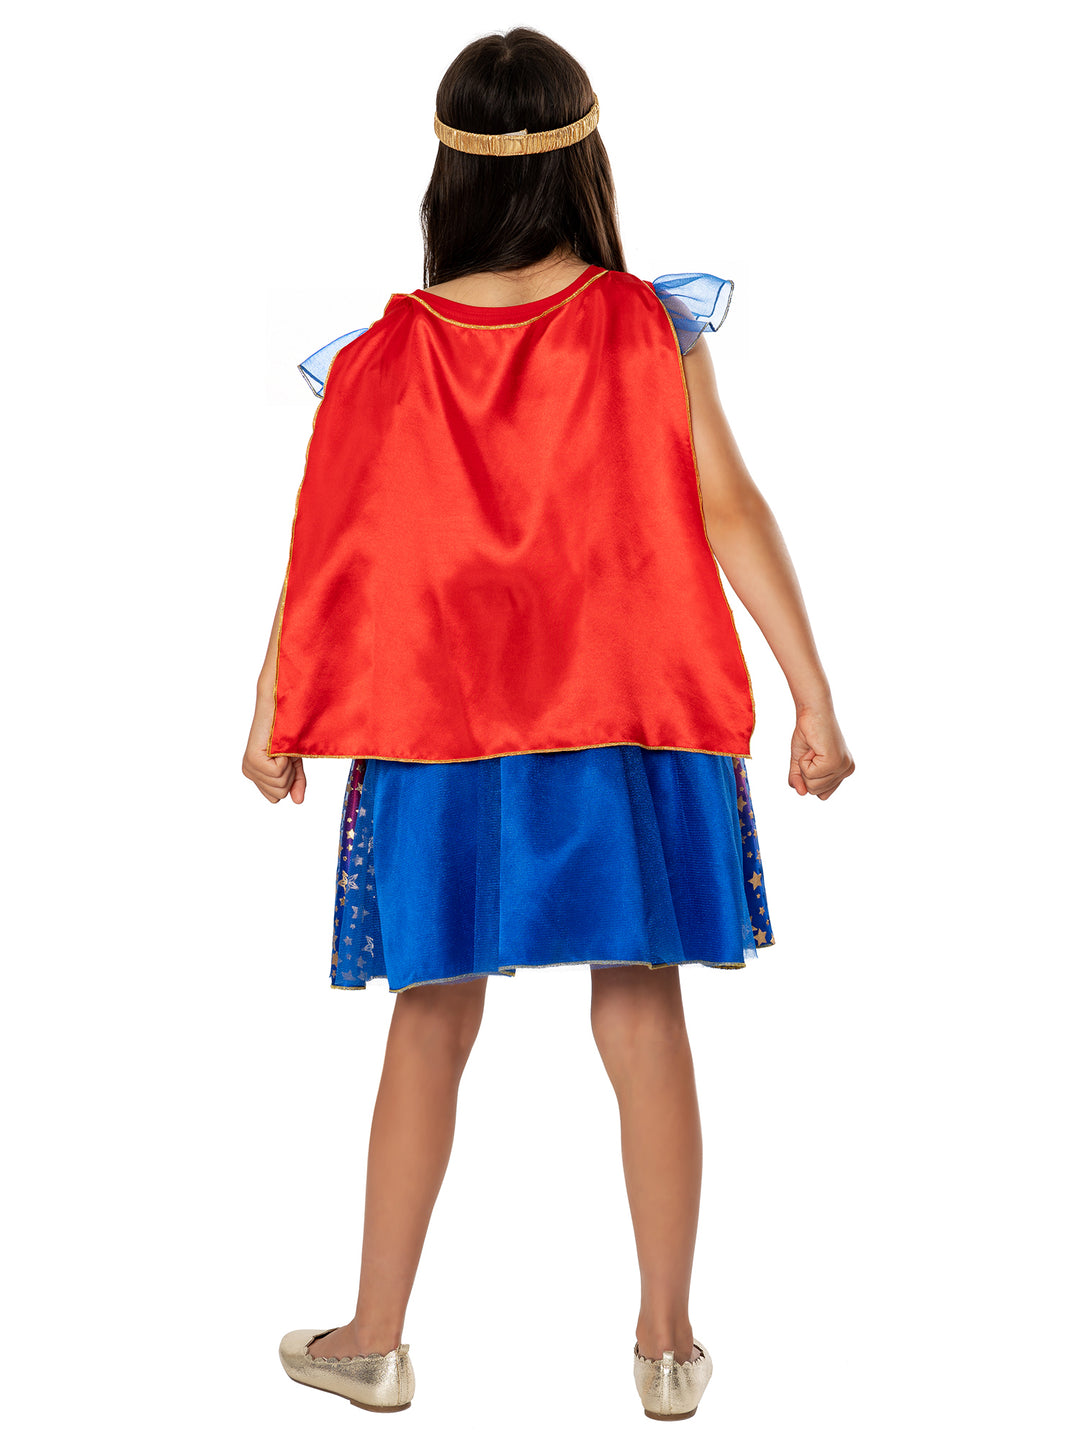 Superhero Deluxe Wonder Woman DC Comics Costume